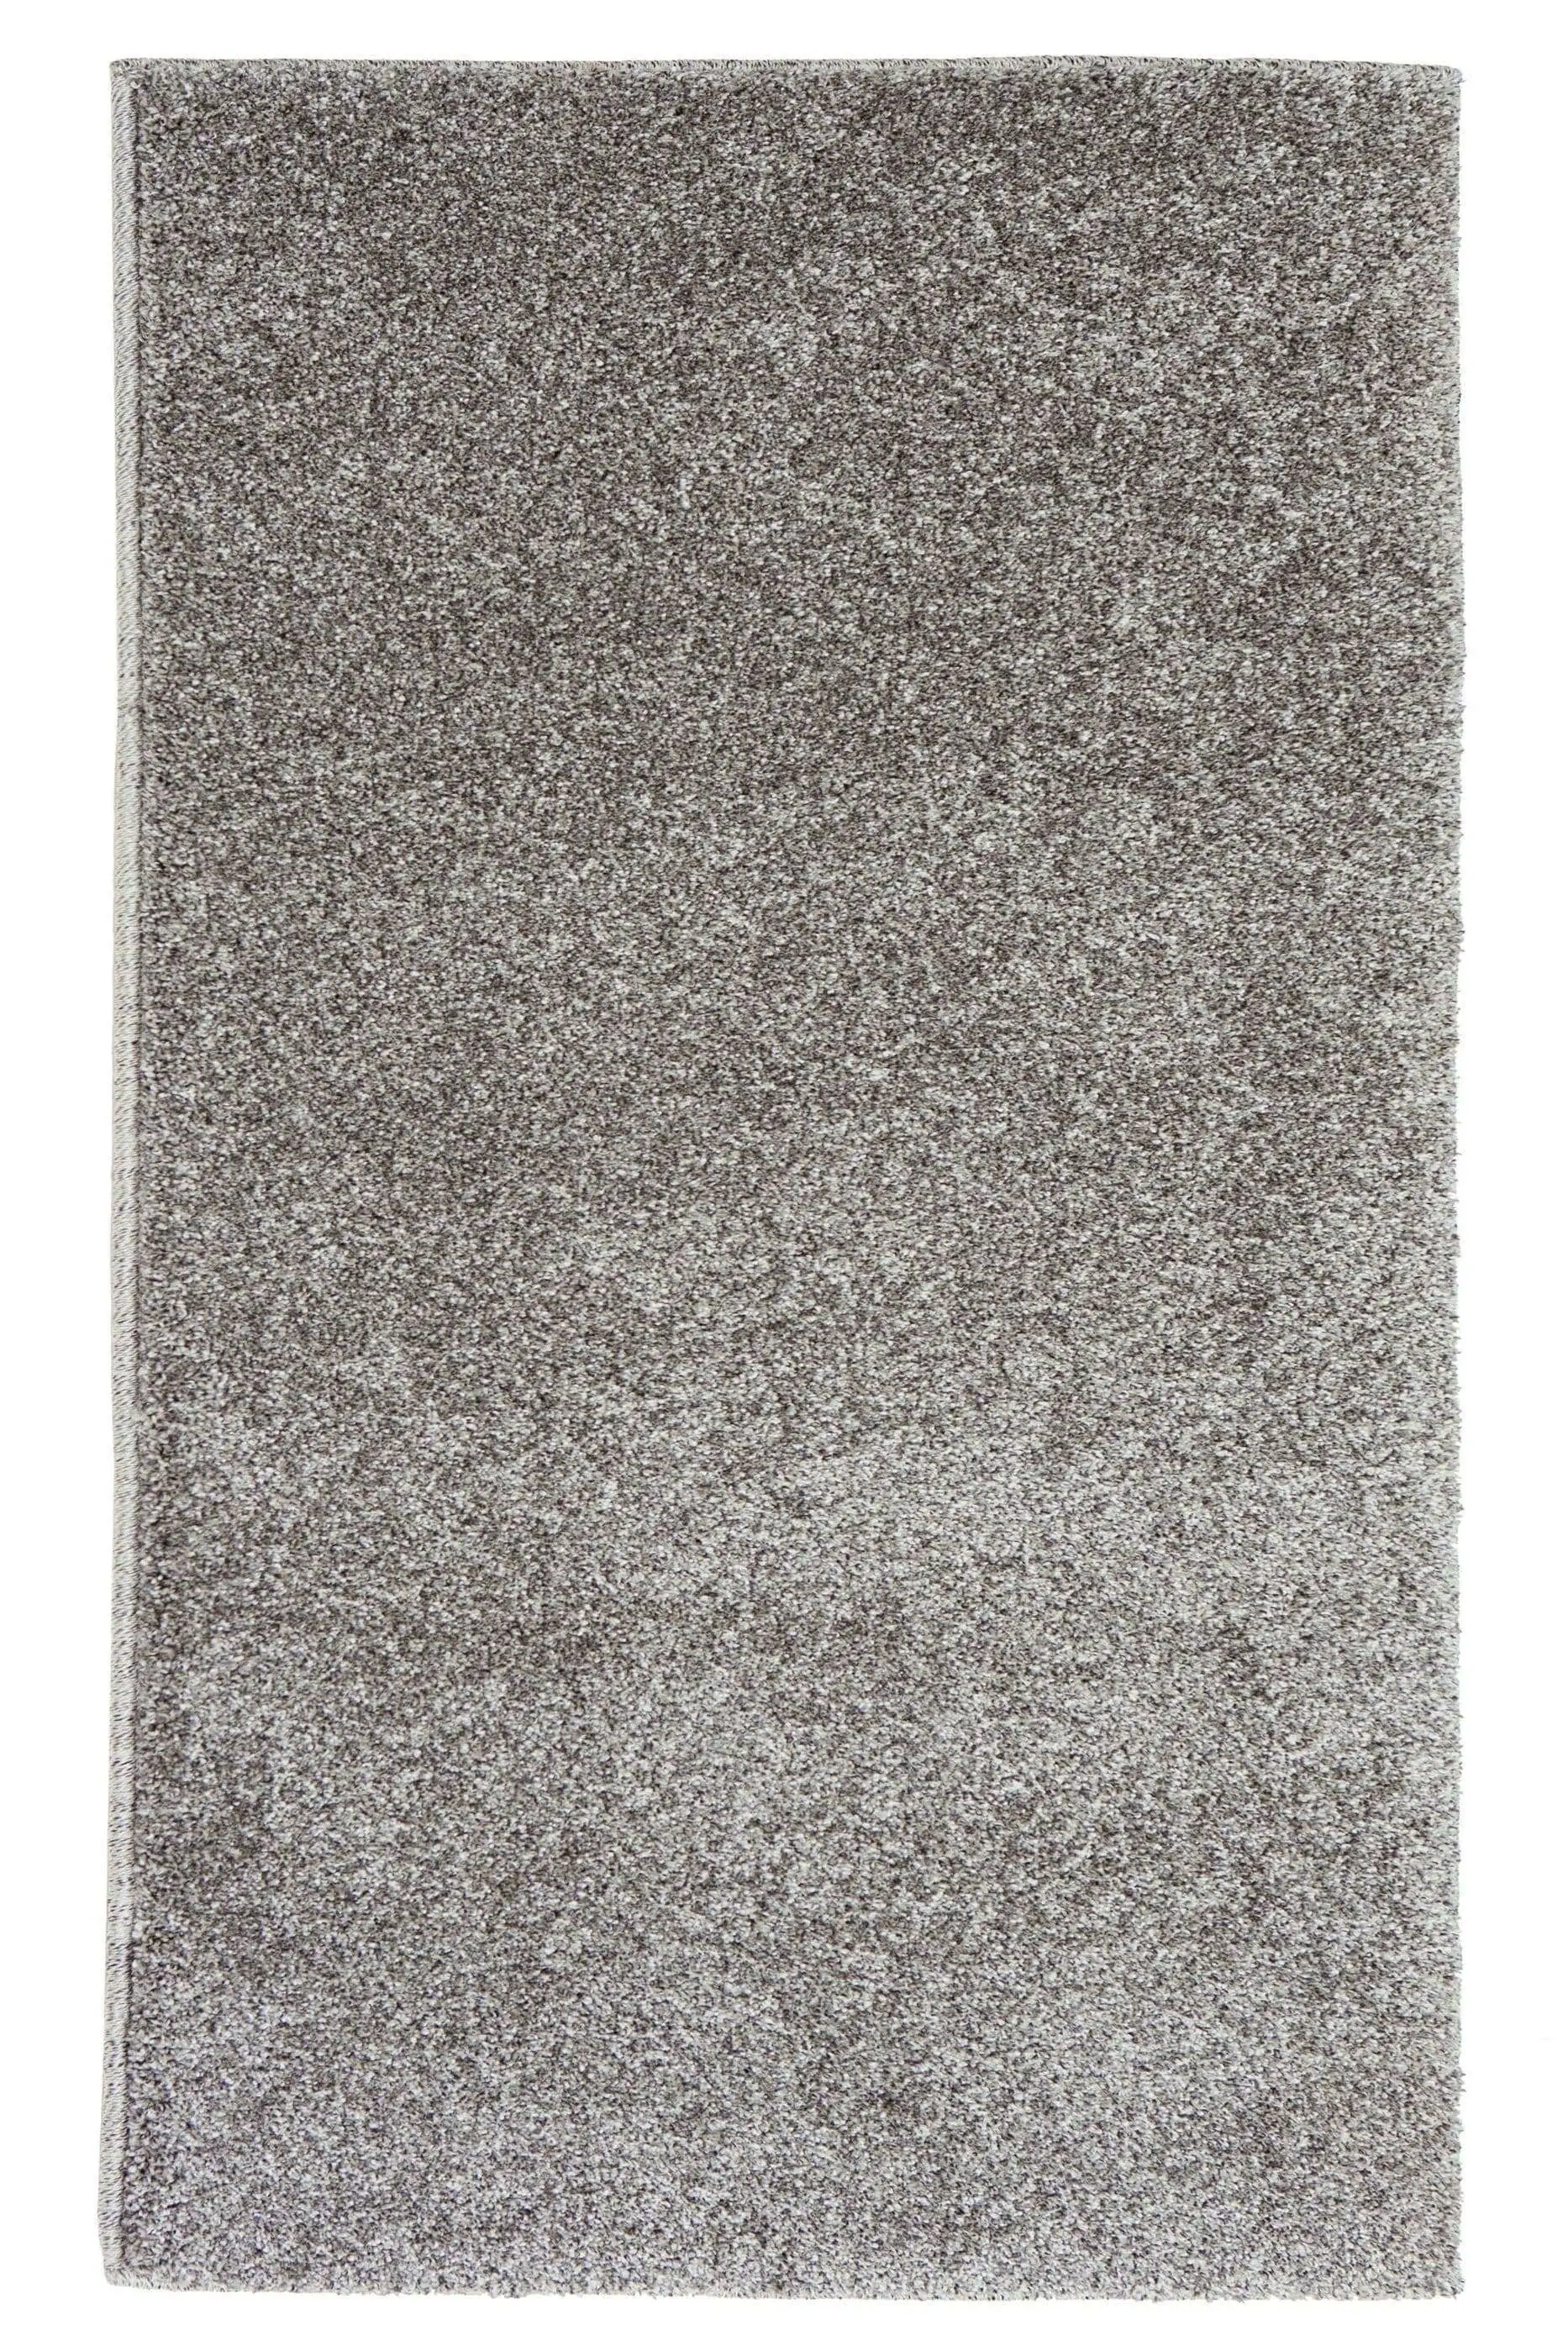 Teppich grau Samoa 6870-001-005 im Wunschmaß